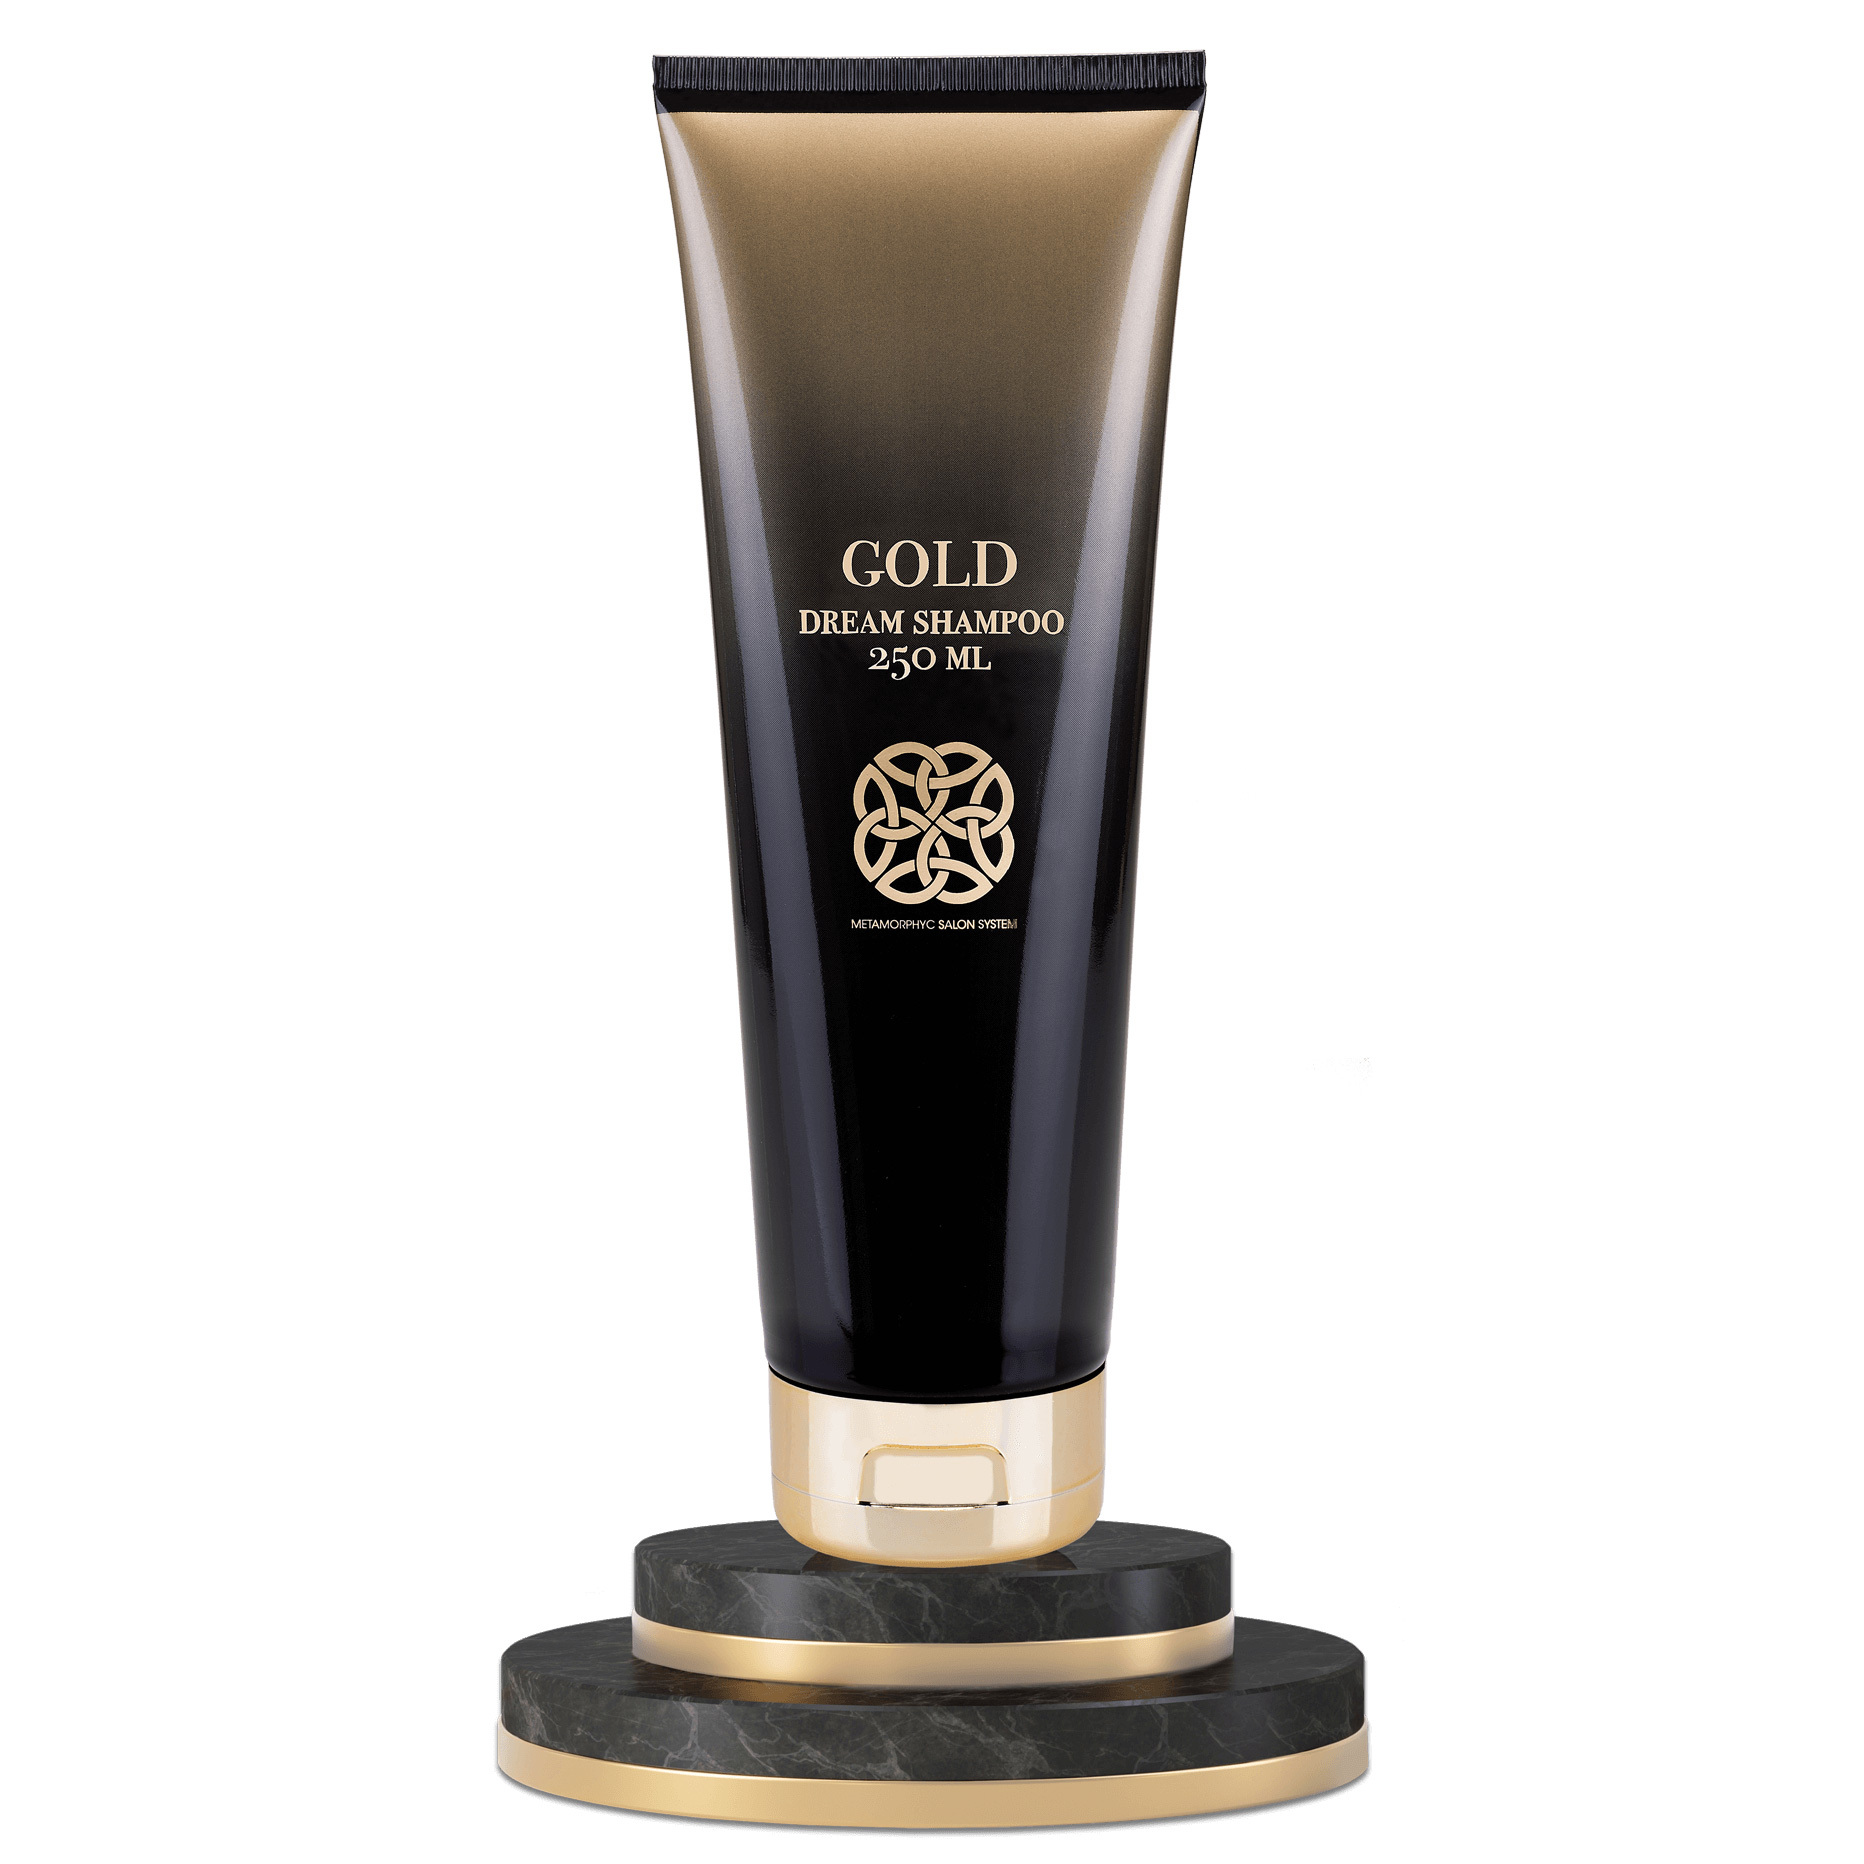 Gold Professional Metamorphyc Salon System - Dream Shampoo